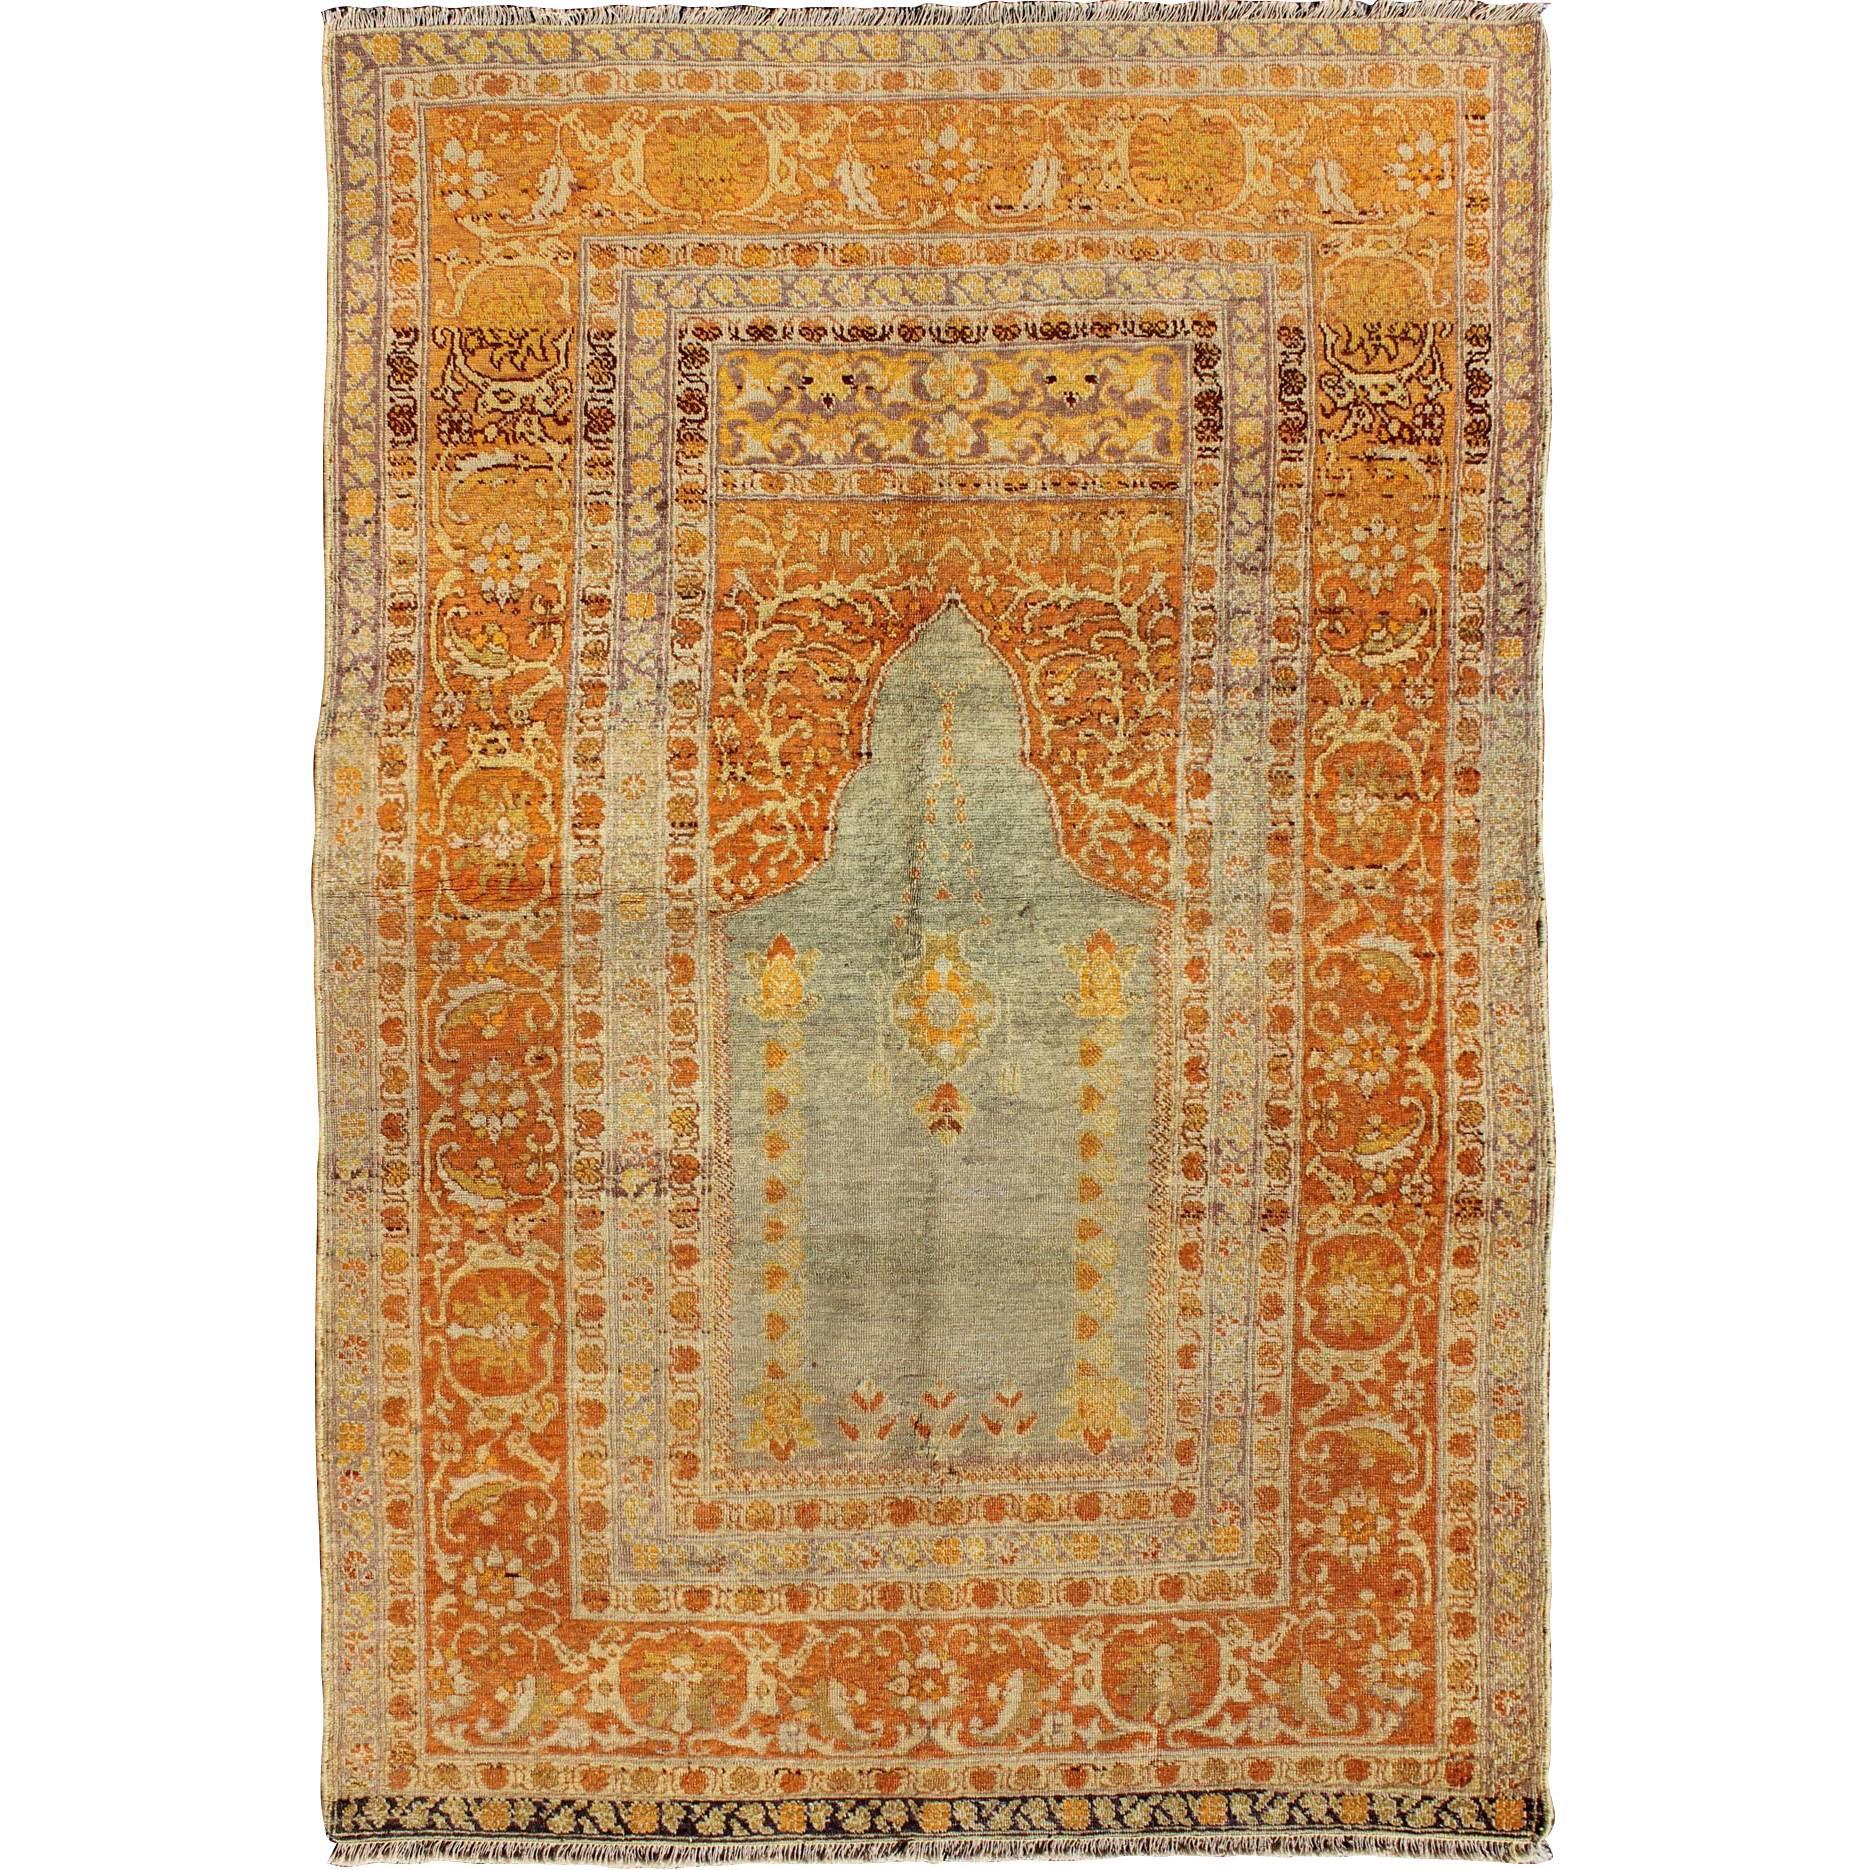 Antique Turkish Sivas Carpet with Prayer Design in Light Silver and Copper